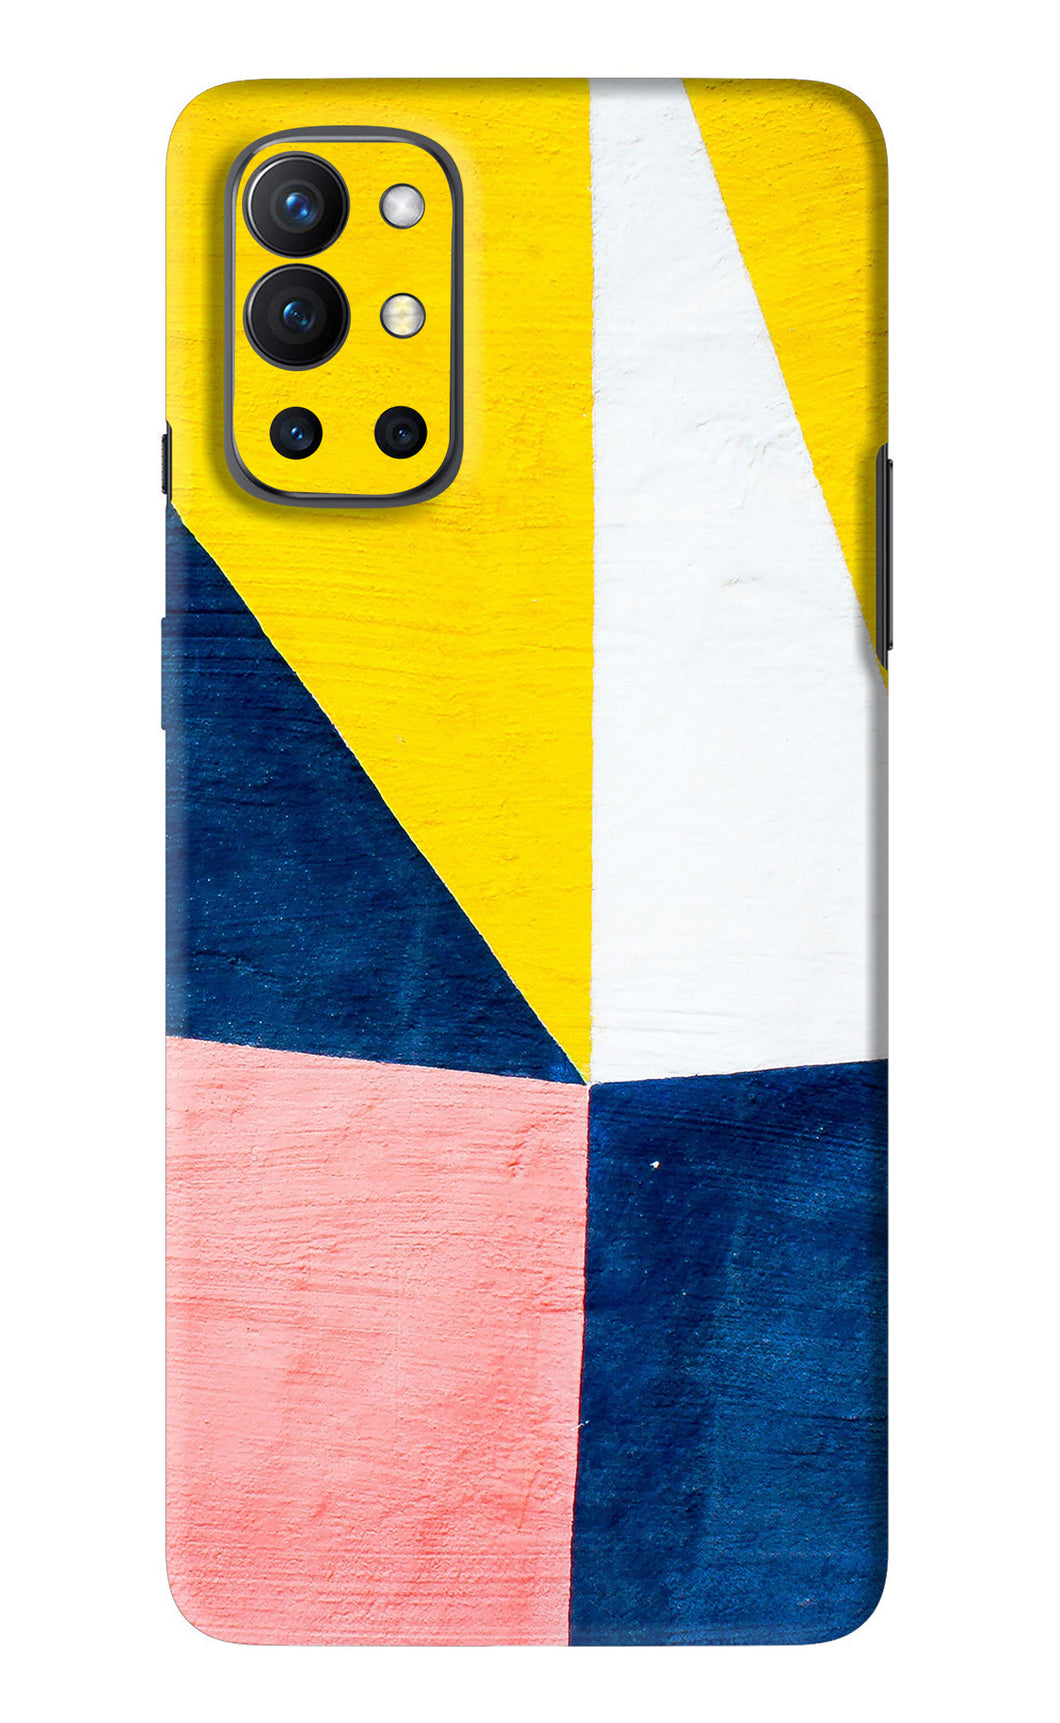 Colourful Art OnePlus 9R Back Skin Wrap